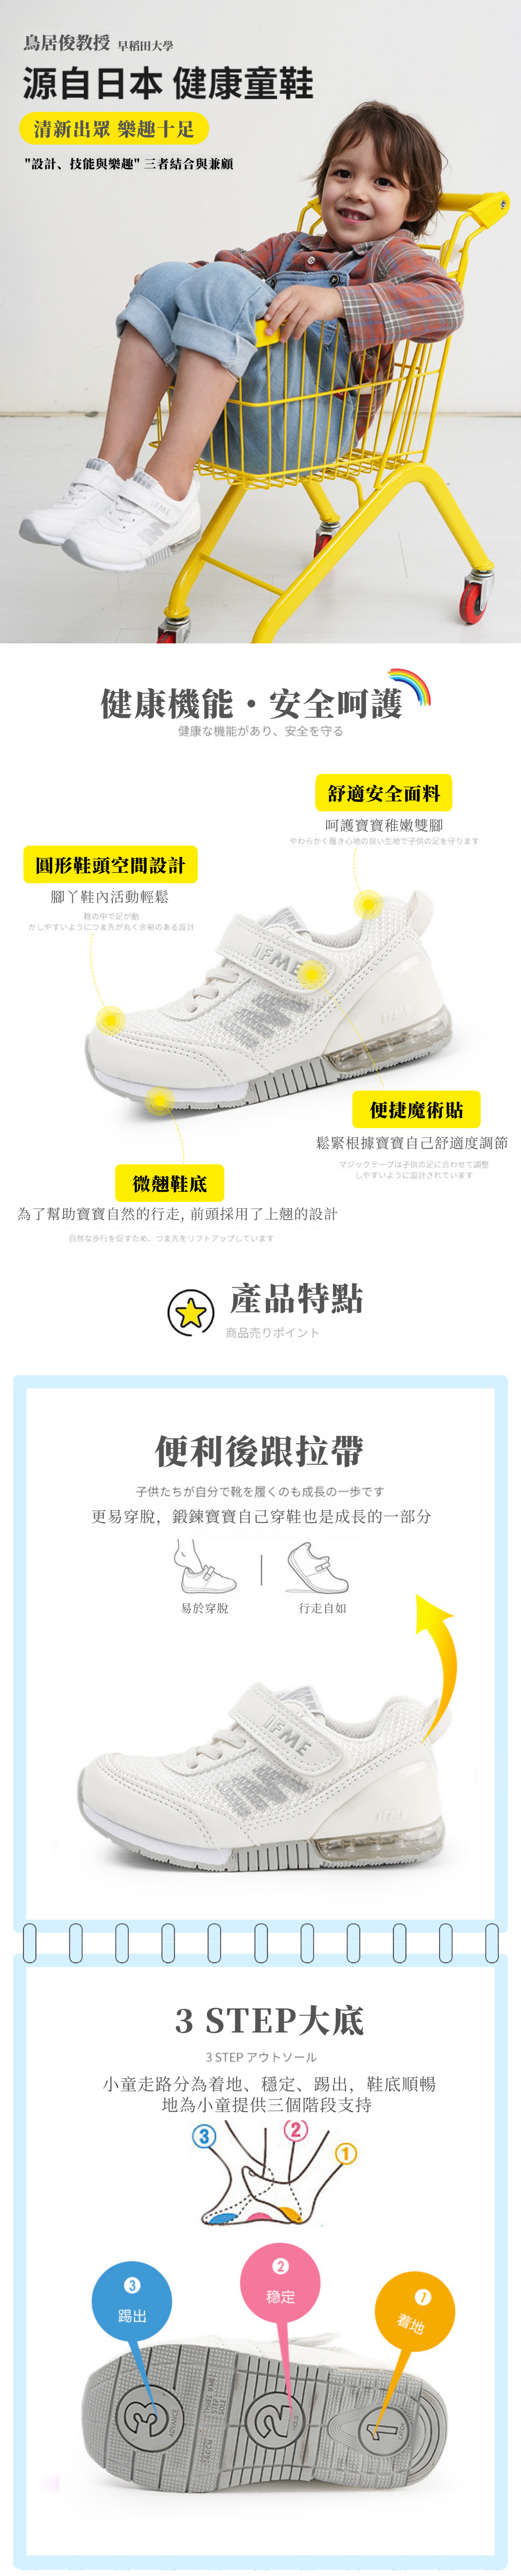 IFME 輕量系列 30-0115 小童機能鞋產品特點